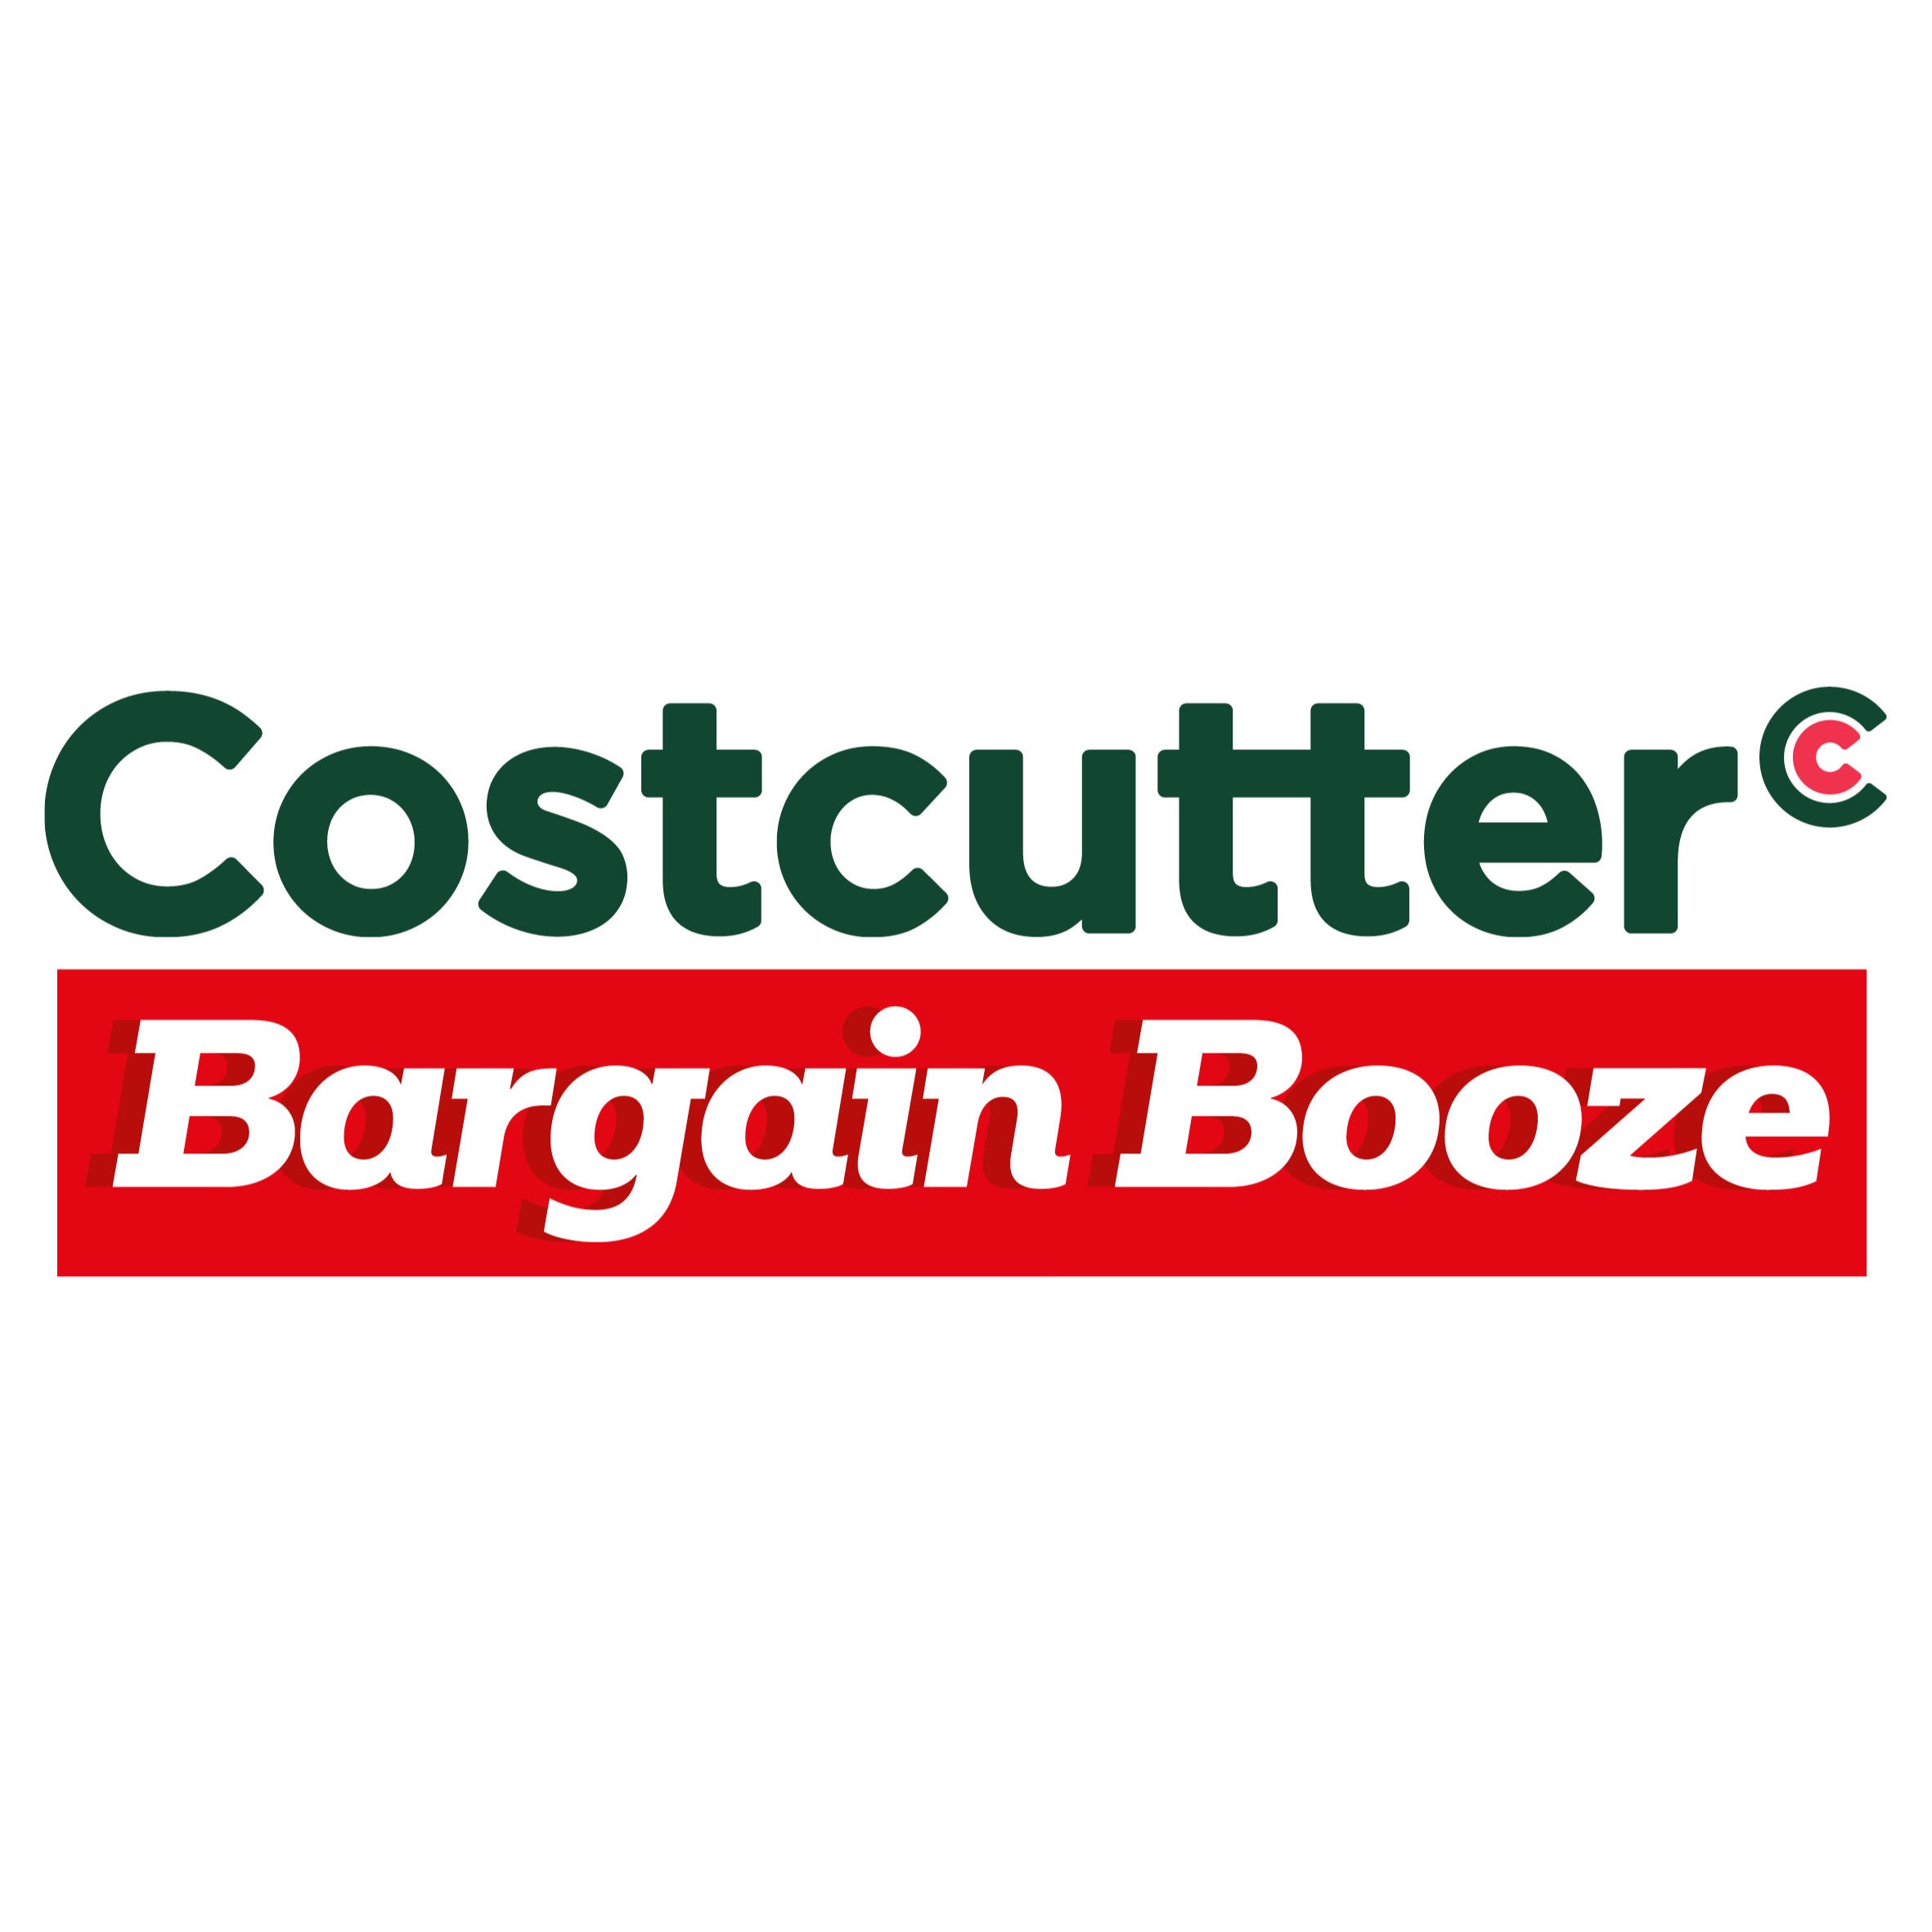 Costcutter featuring Bargain Booze  - NOW OPEN Logo